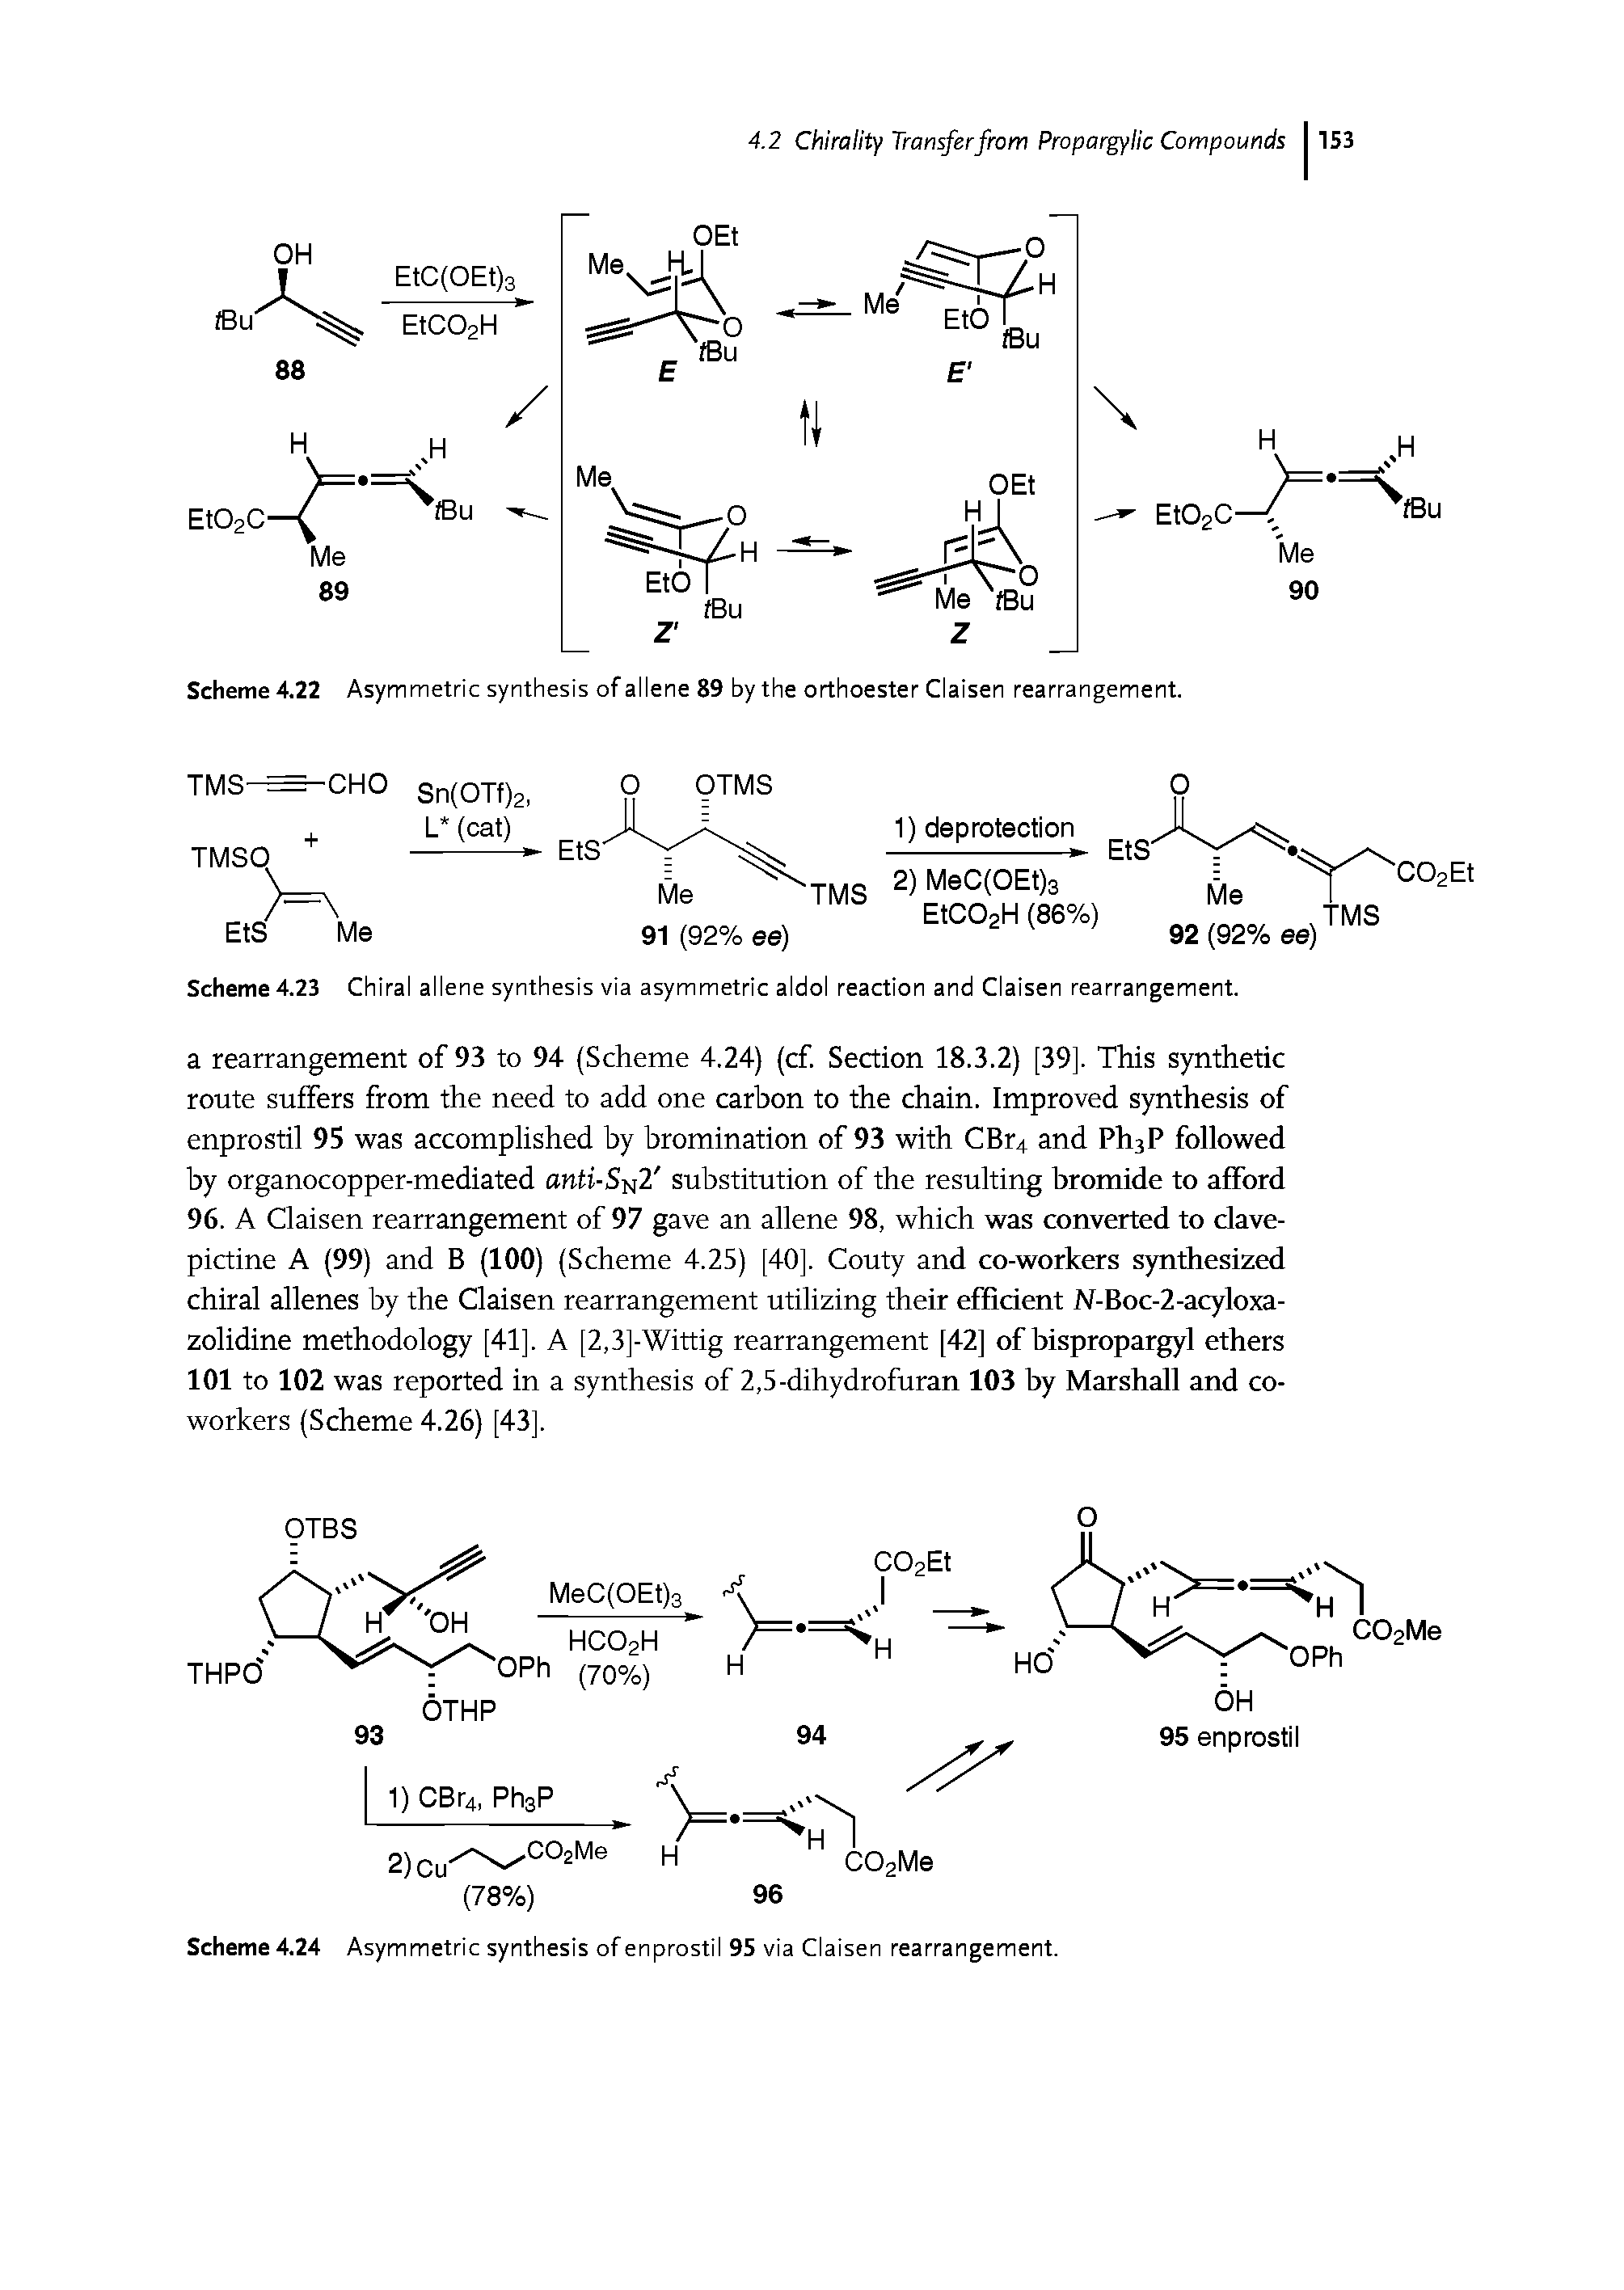 Scheme 4.24 Asymmetric synthesis of enprostil 95 via Claisen rearrangement.